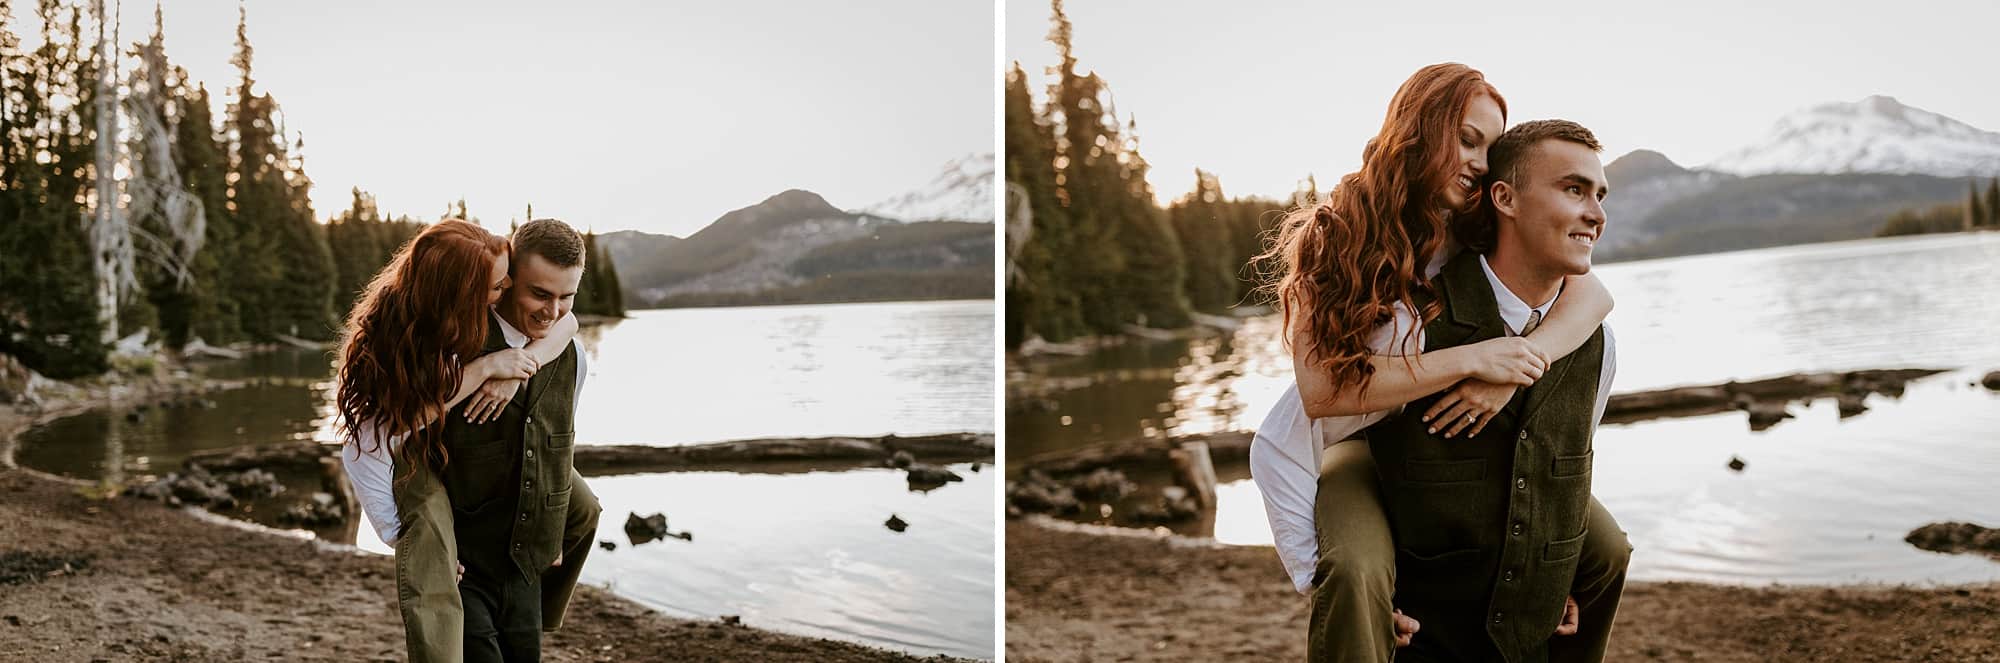 engagement session sparks lake oregon mountain lake couple photos